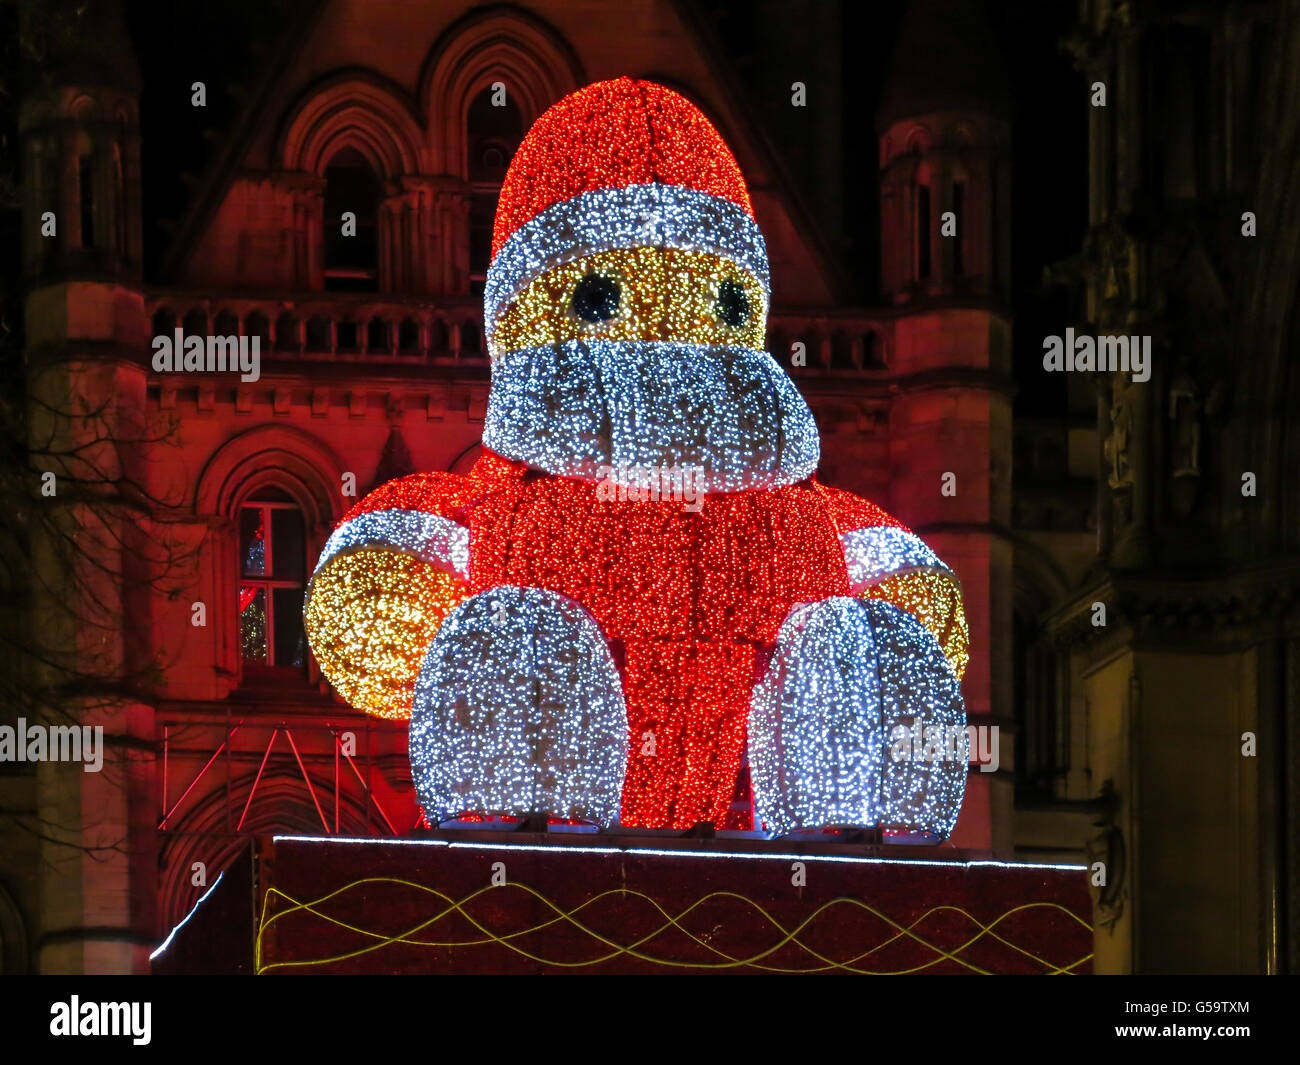 Christmas illuminated Big Santa Claus sitting on town hall in Manchester, England, United Kingdom Stock Photo